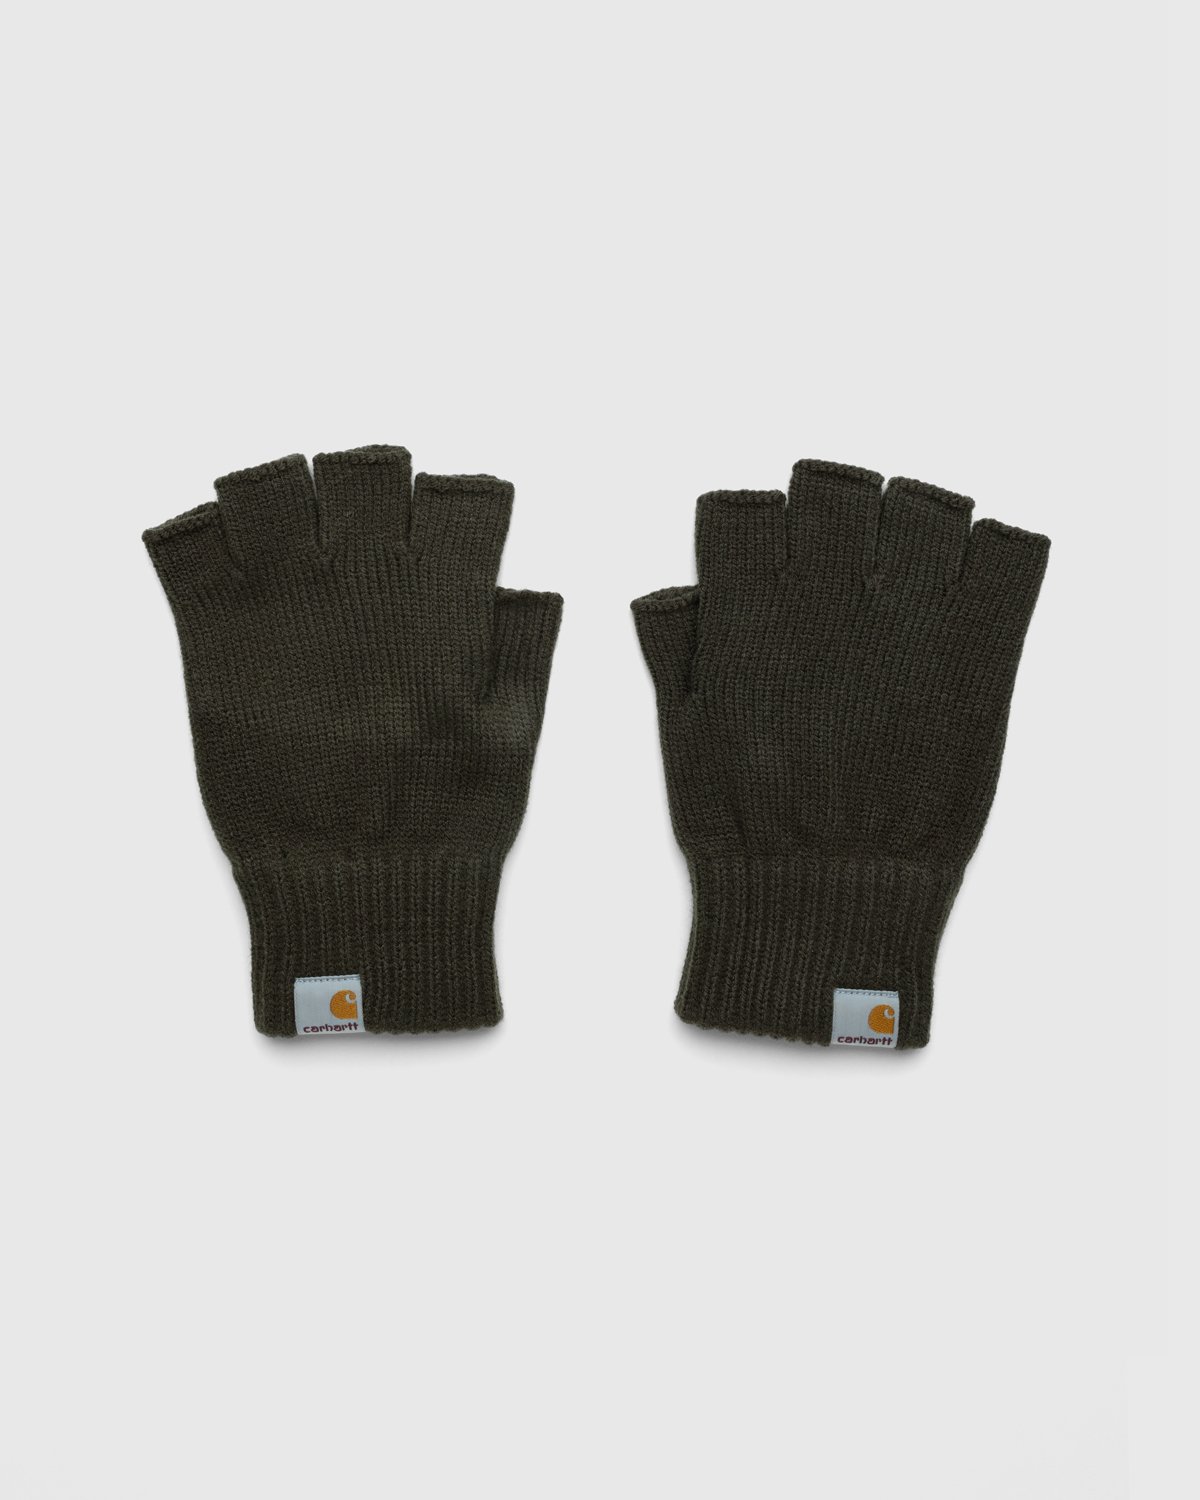 Carhartt WIP - Witten Gloves Khaki - Accessories - Green - Image 1